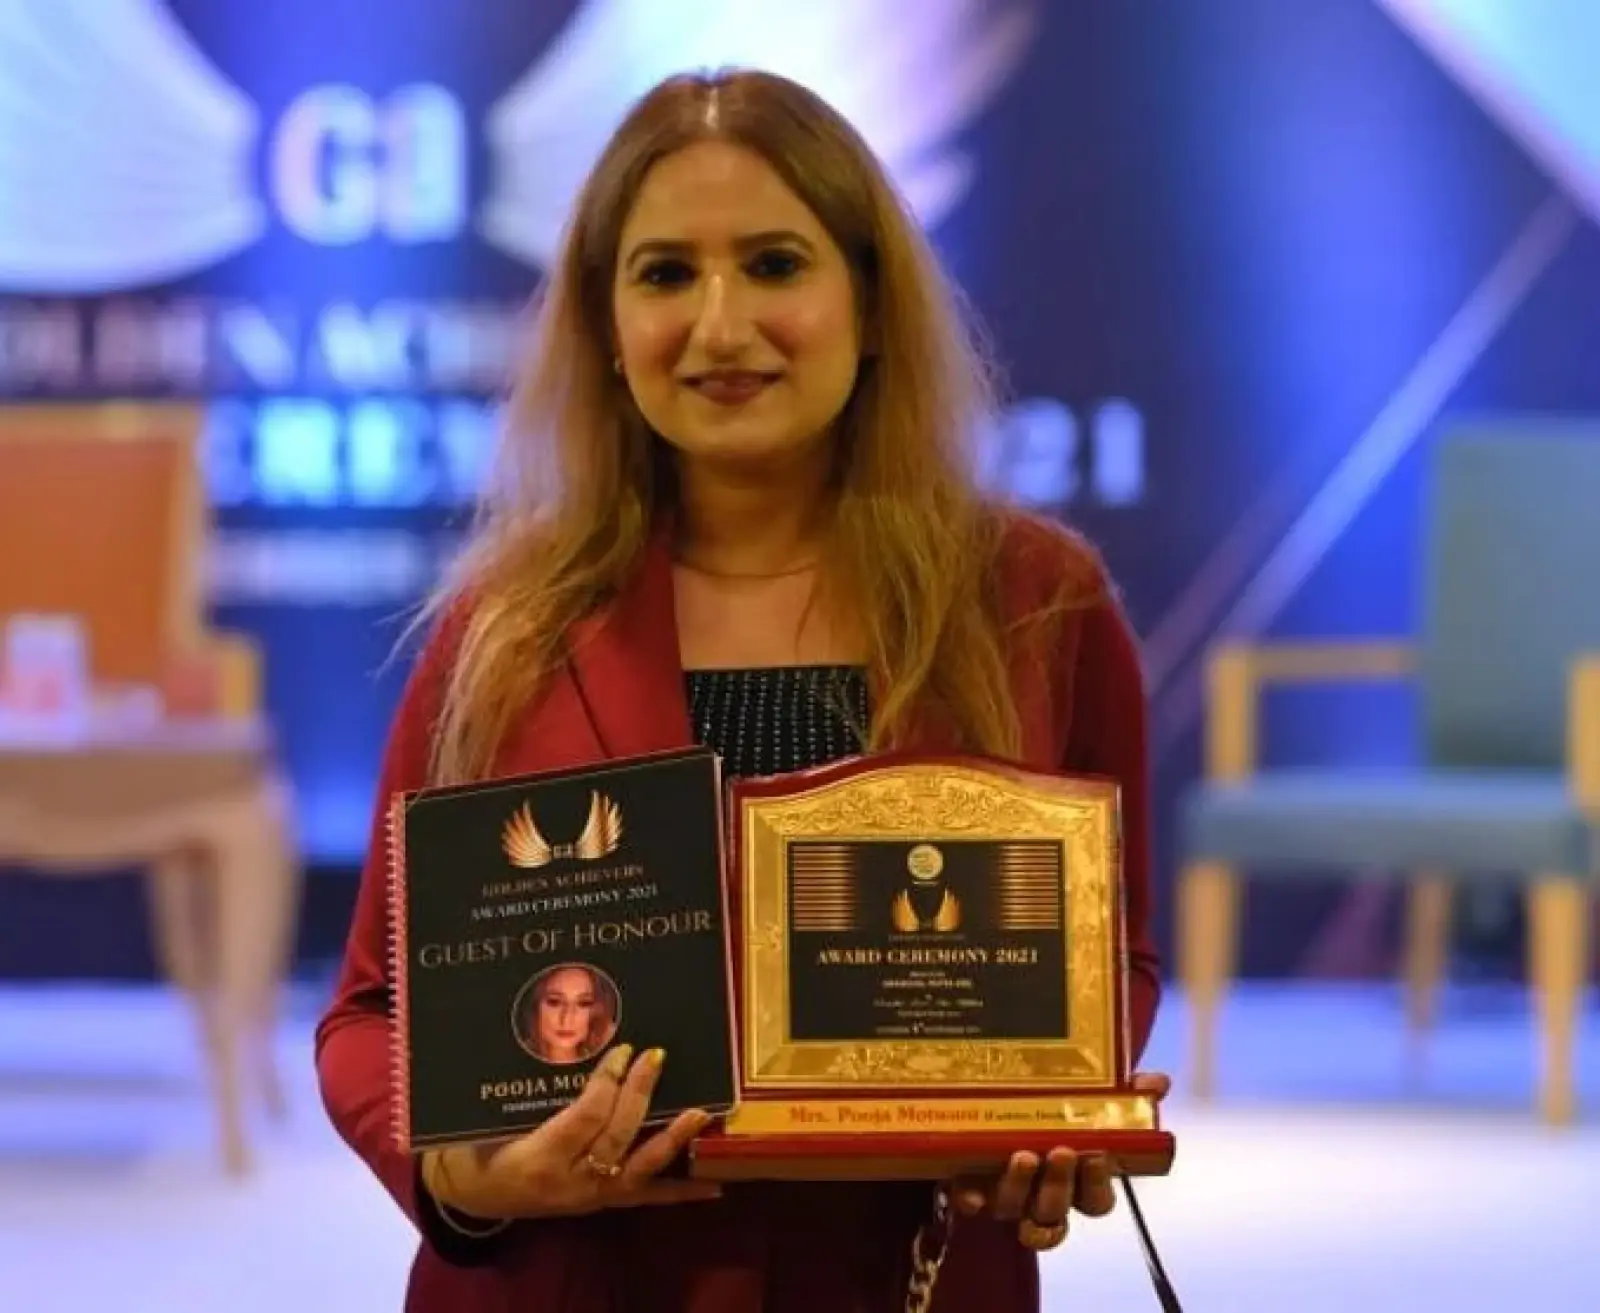 Fashion Designer Pooja Motwani honoured with Golden Achievers Award